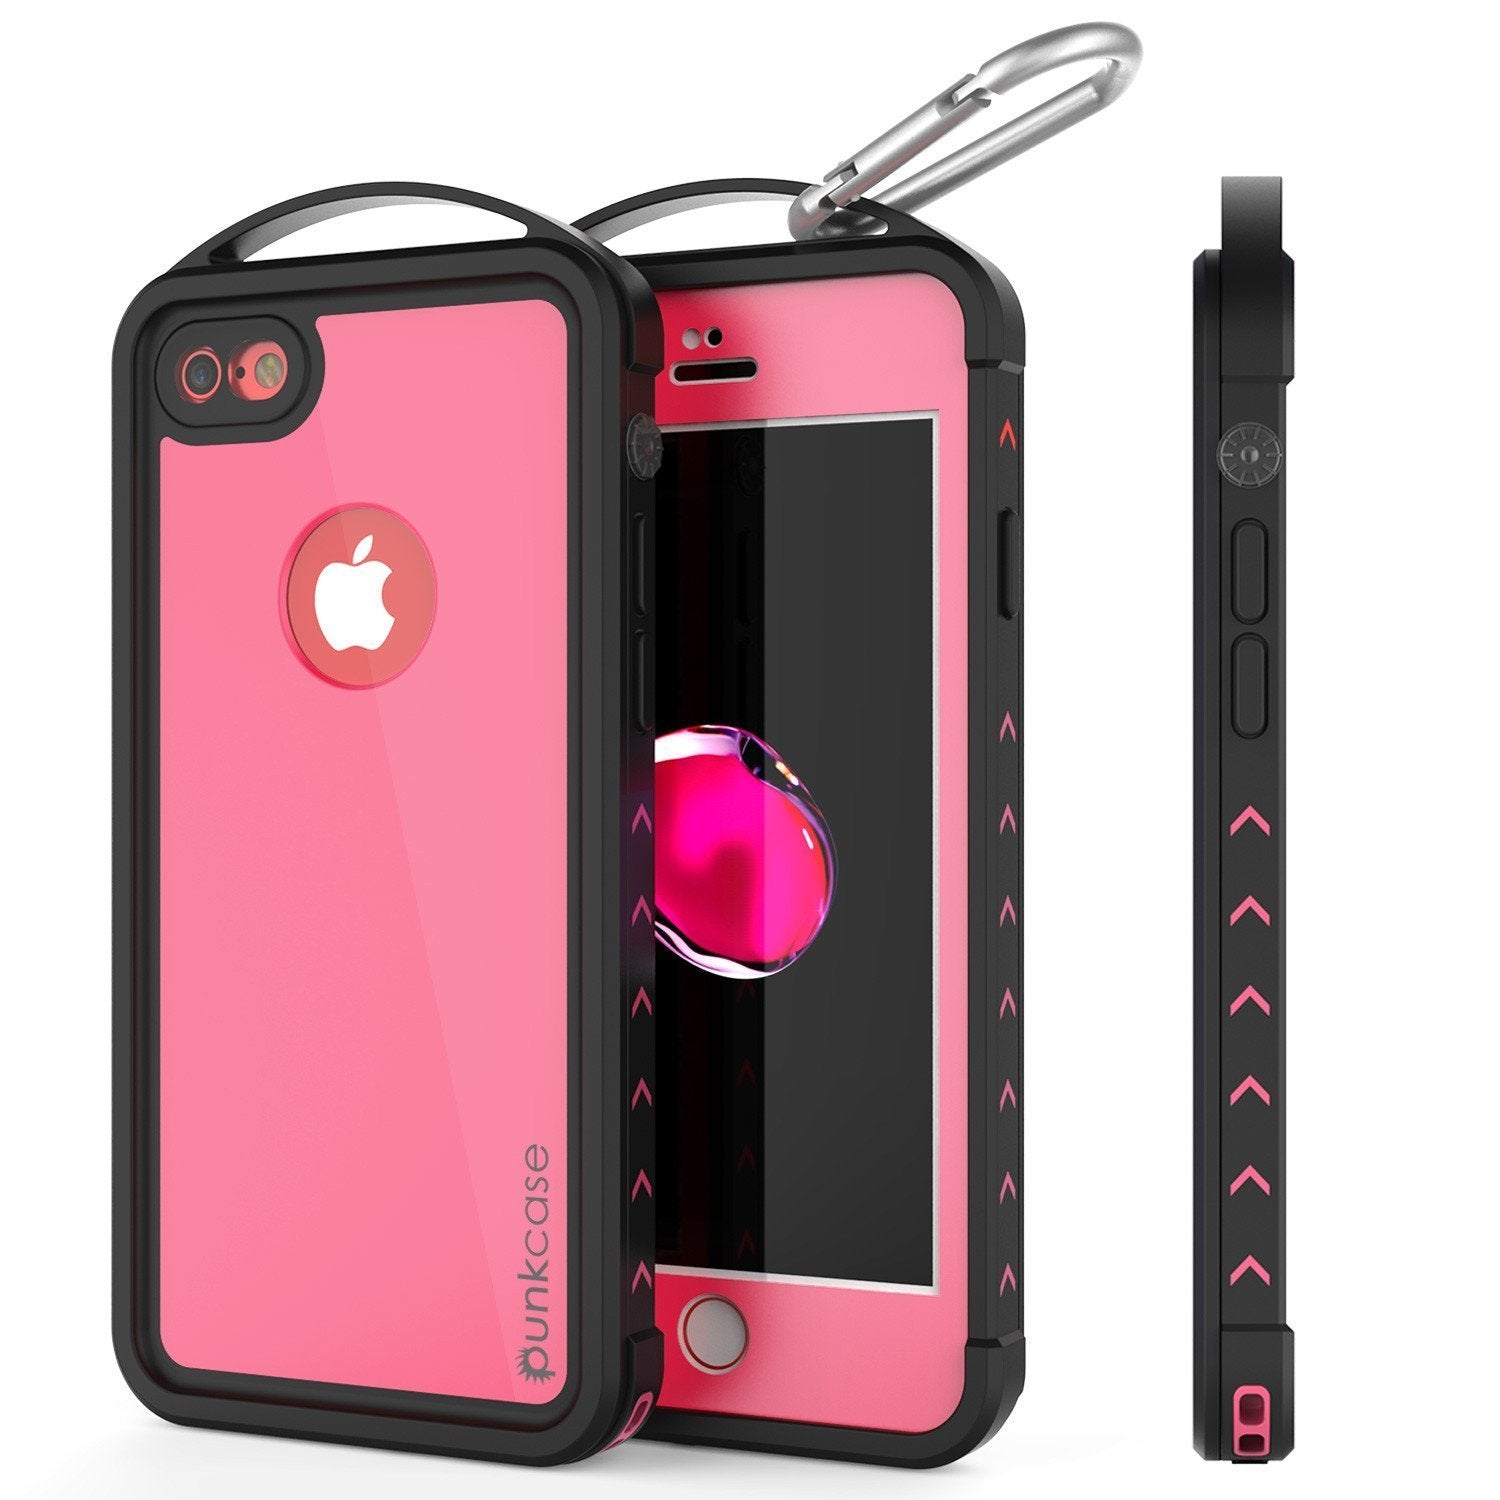 iPhone SE (4.7") Waterproof Case, Punkcase ALPINE Series, Pink | Heavy Duty Armor Cover